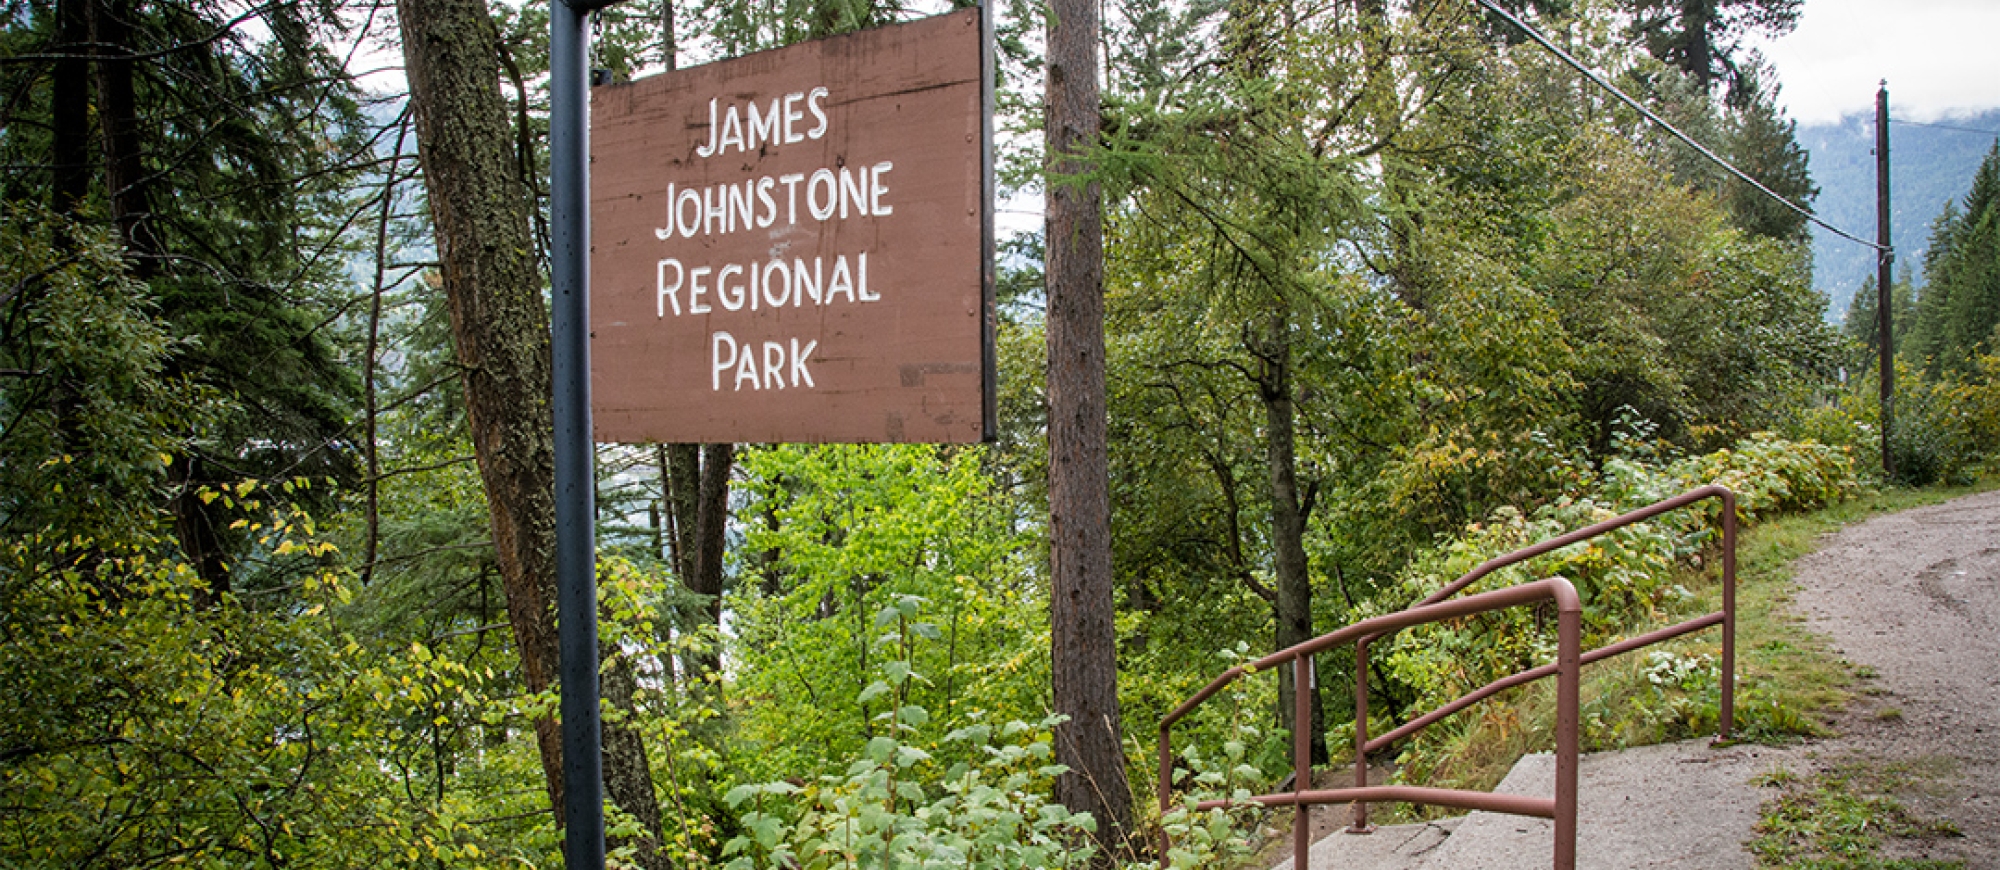 James Johnstone Regional Park